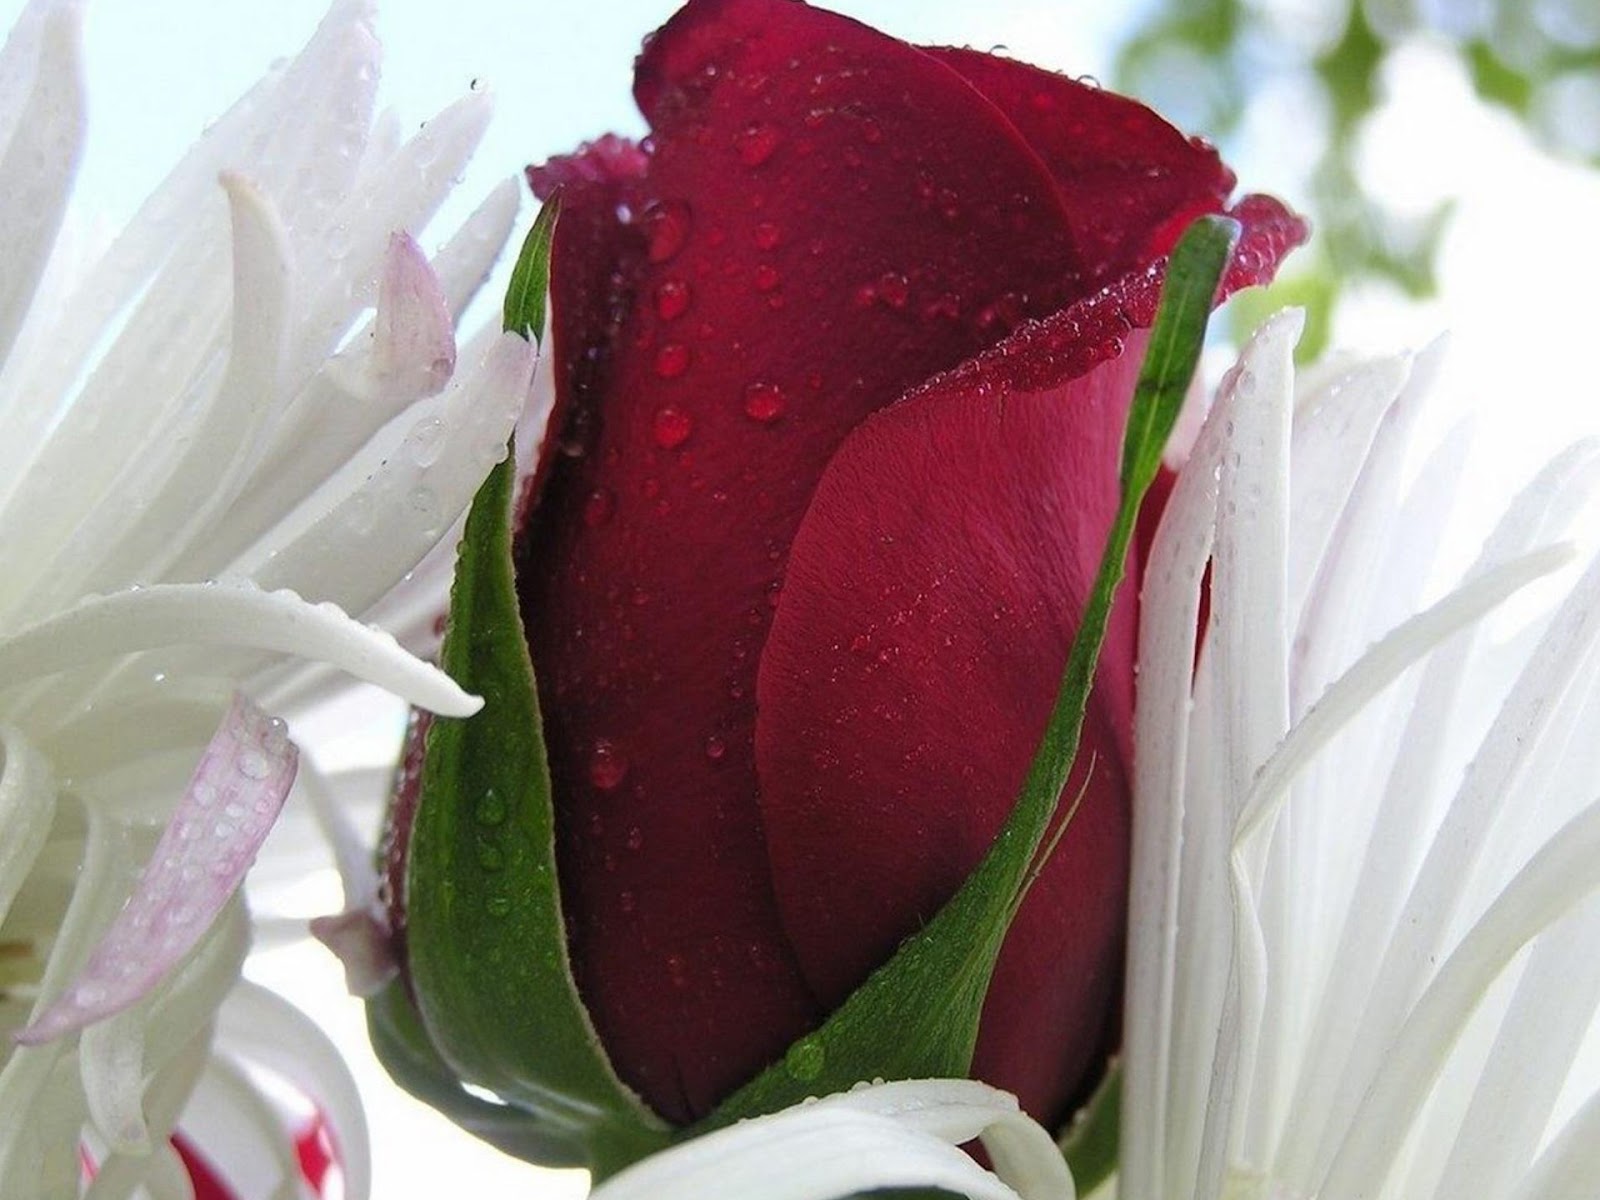 https://blogger.googleusercontent.com/img/b/R29vZ2xl/AVvXsEj3s0R2v5XHTD_etyg0KJxkZk0vPUqfrb6bkHC34H4iO0N3eELq6v42bYd2wULK7WmbQtBE8CGXT4JIMpnv7thoUNXKZRHyQ5oy982IseXmkmmtCMzG7RbbxgMAQJ4BAc35TcRTFNdQpeih/s1600/Red_rose_bud_-_Beautiful_flowers.jpg